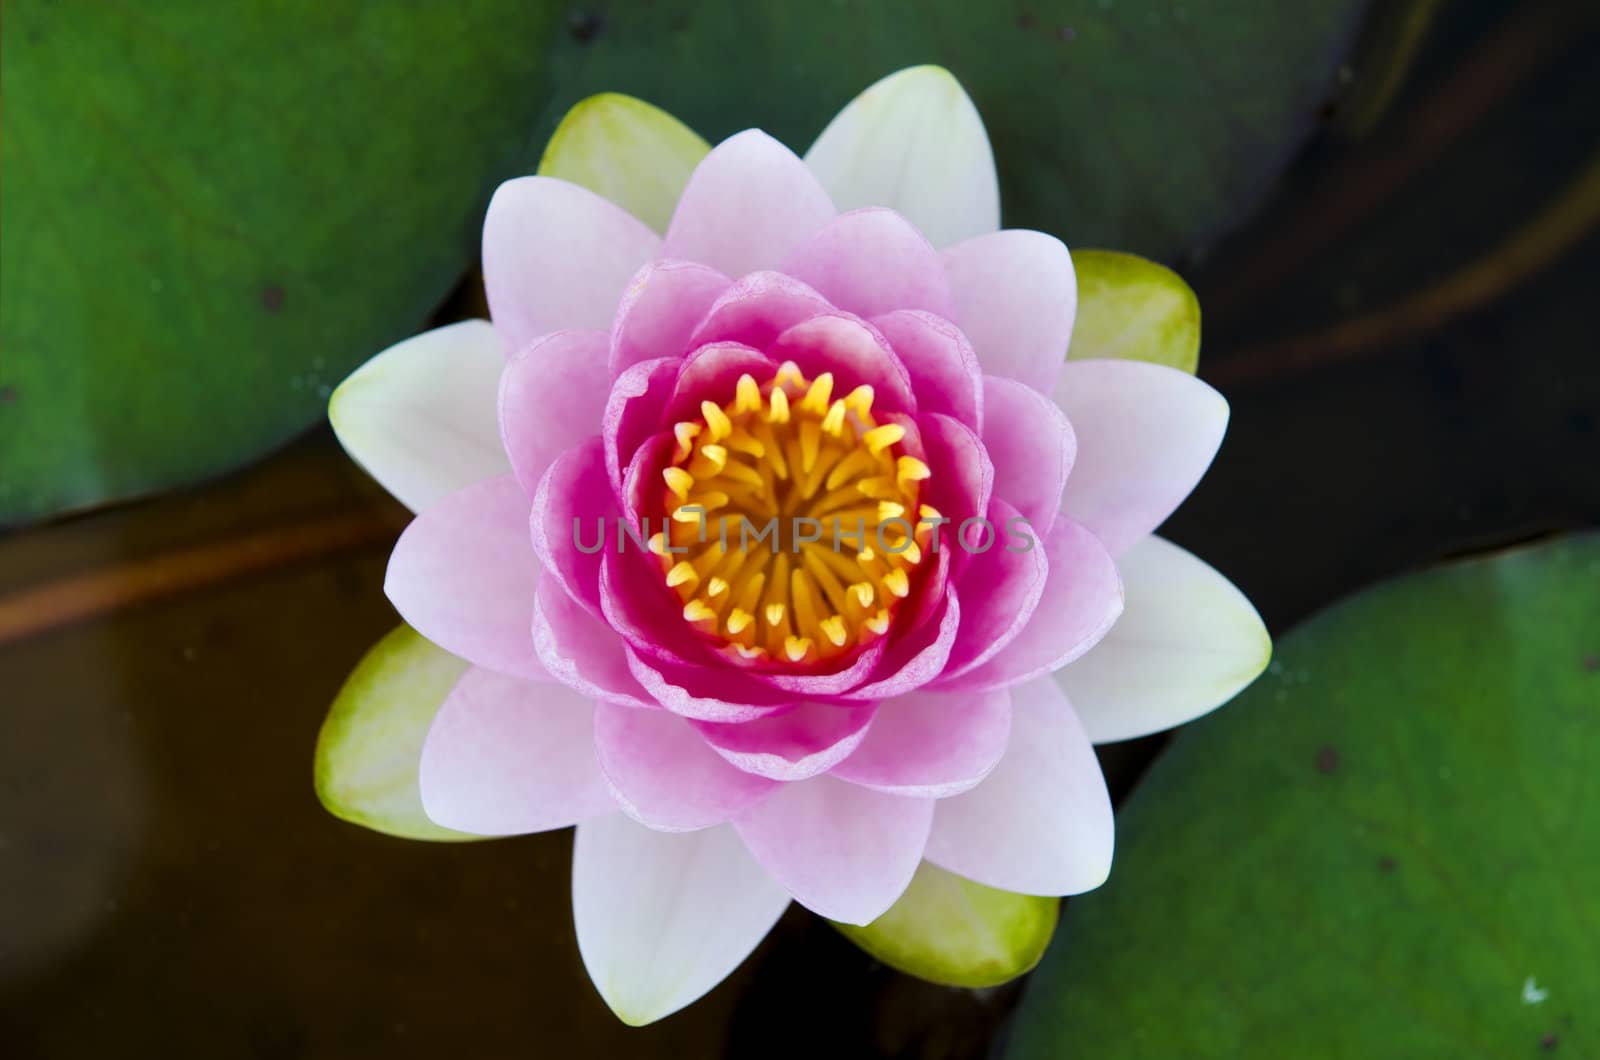 symmetrical lotus for conceptual photo 